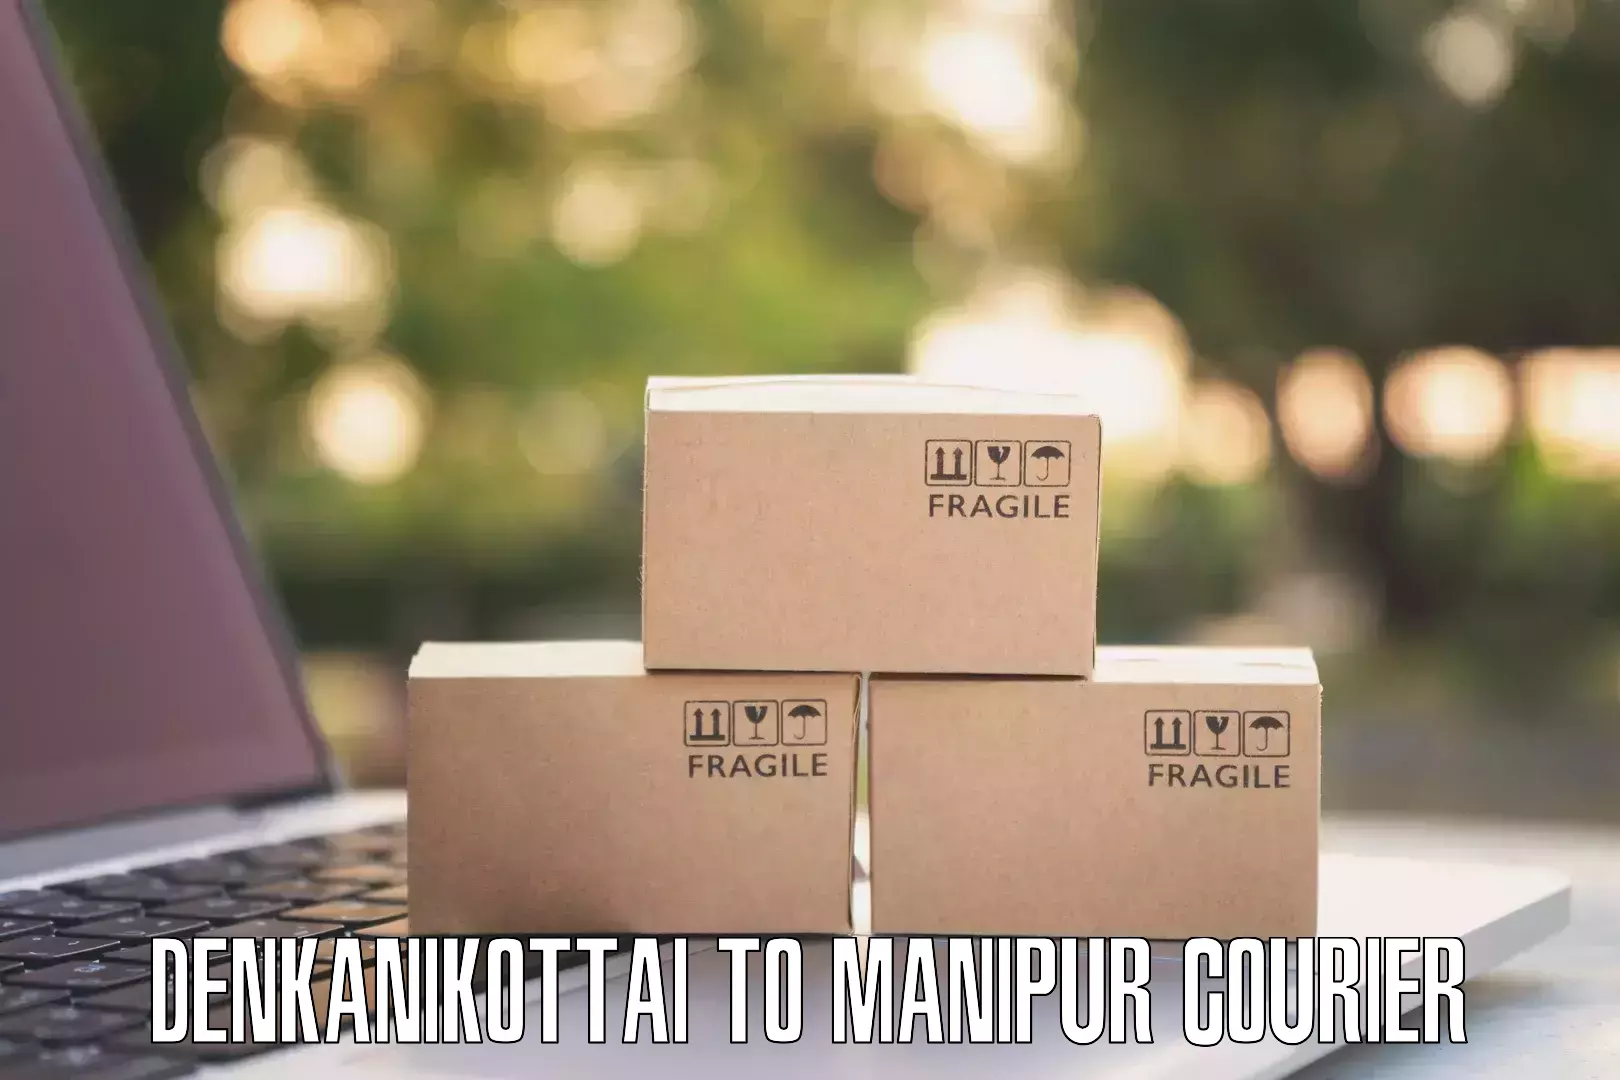 Nationwide shipping capabilities Denkanikottai to IIIT Senapati